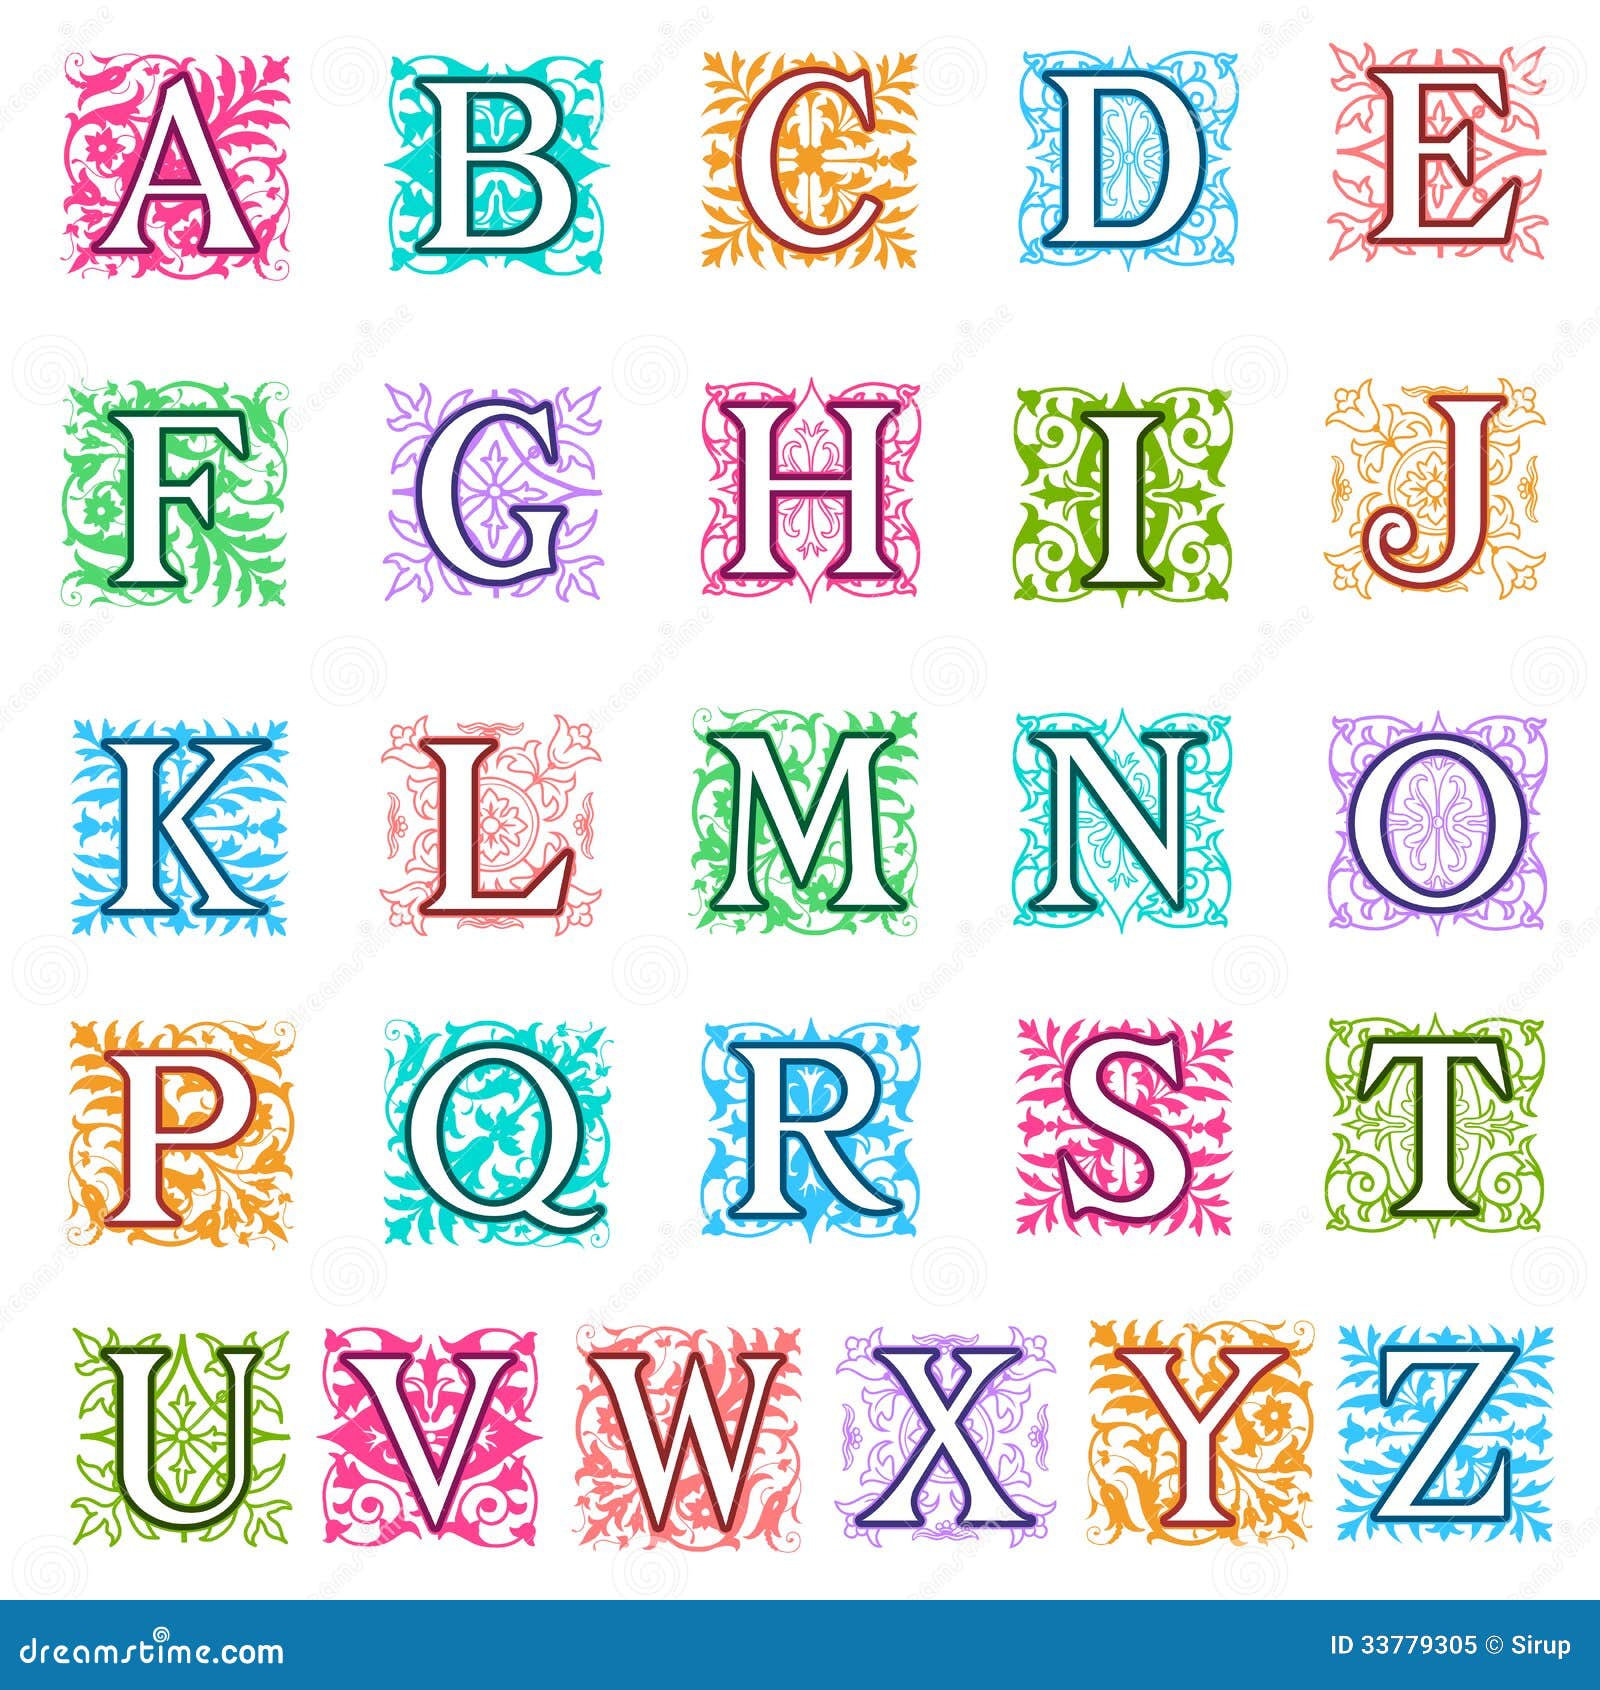 foliate and floral alphabet letters set